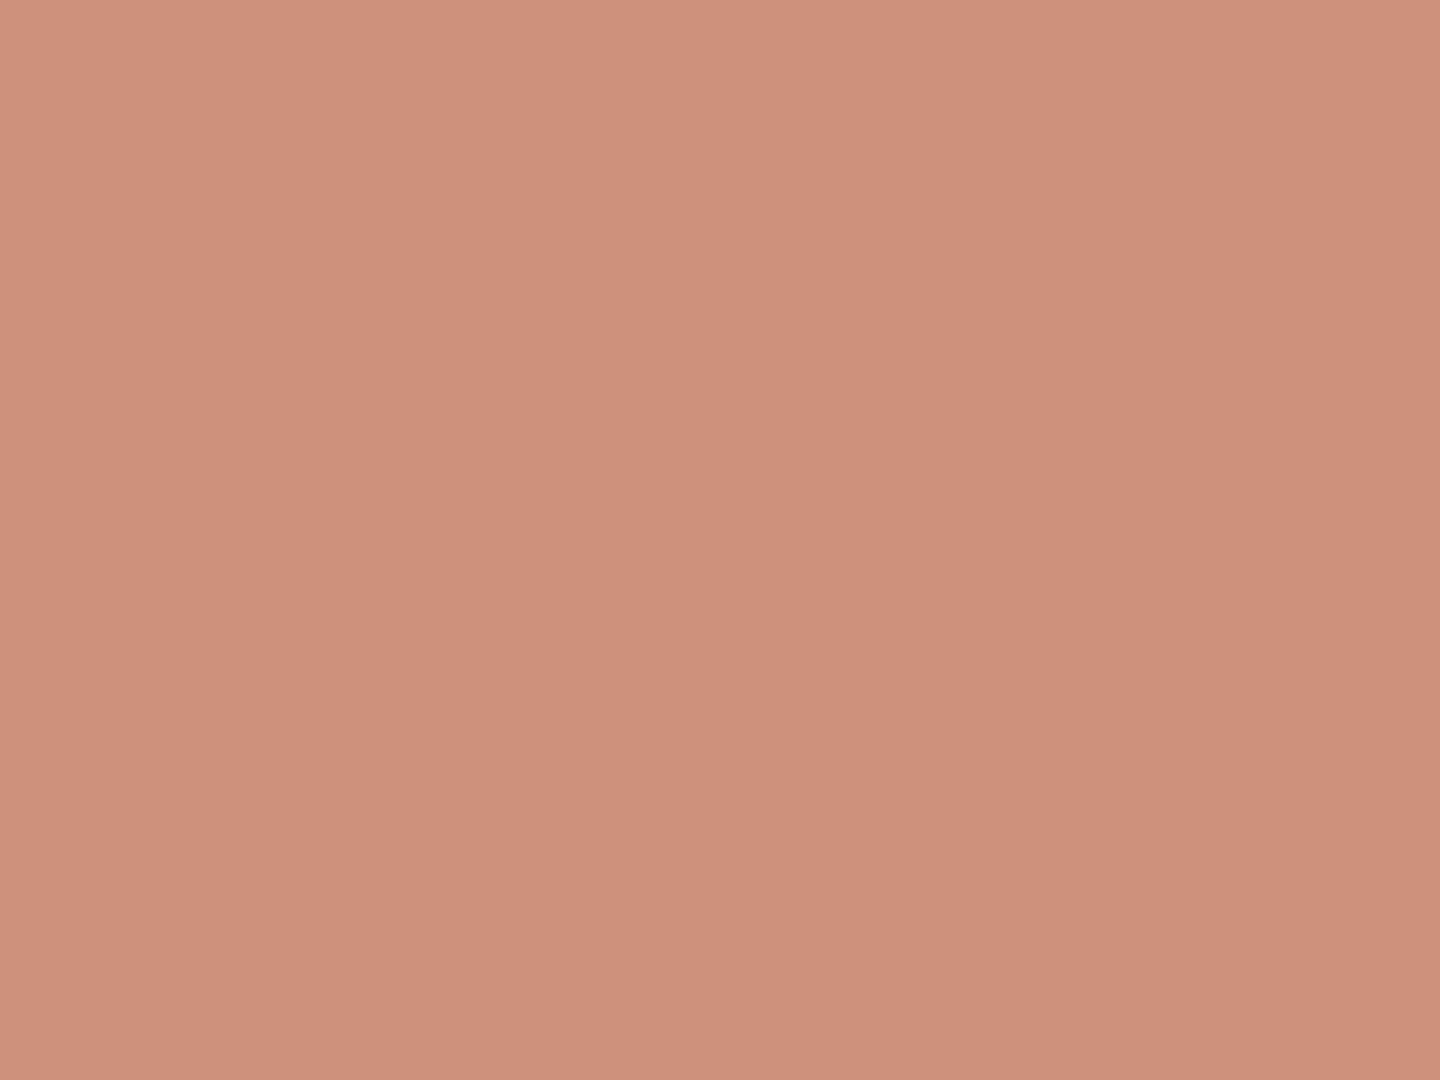 Tyynyliina Fond - Pink Terracotta